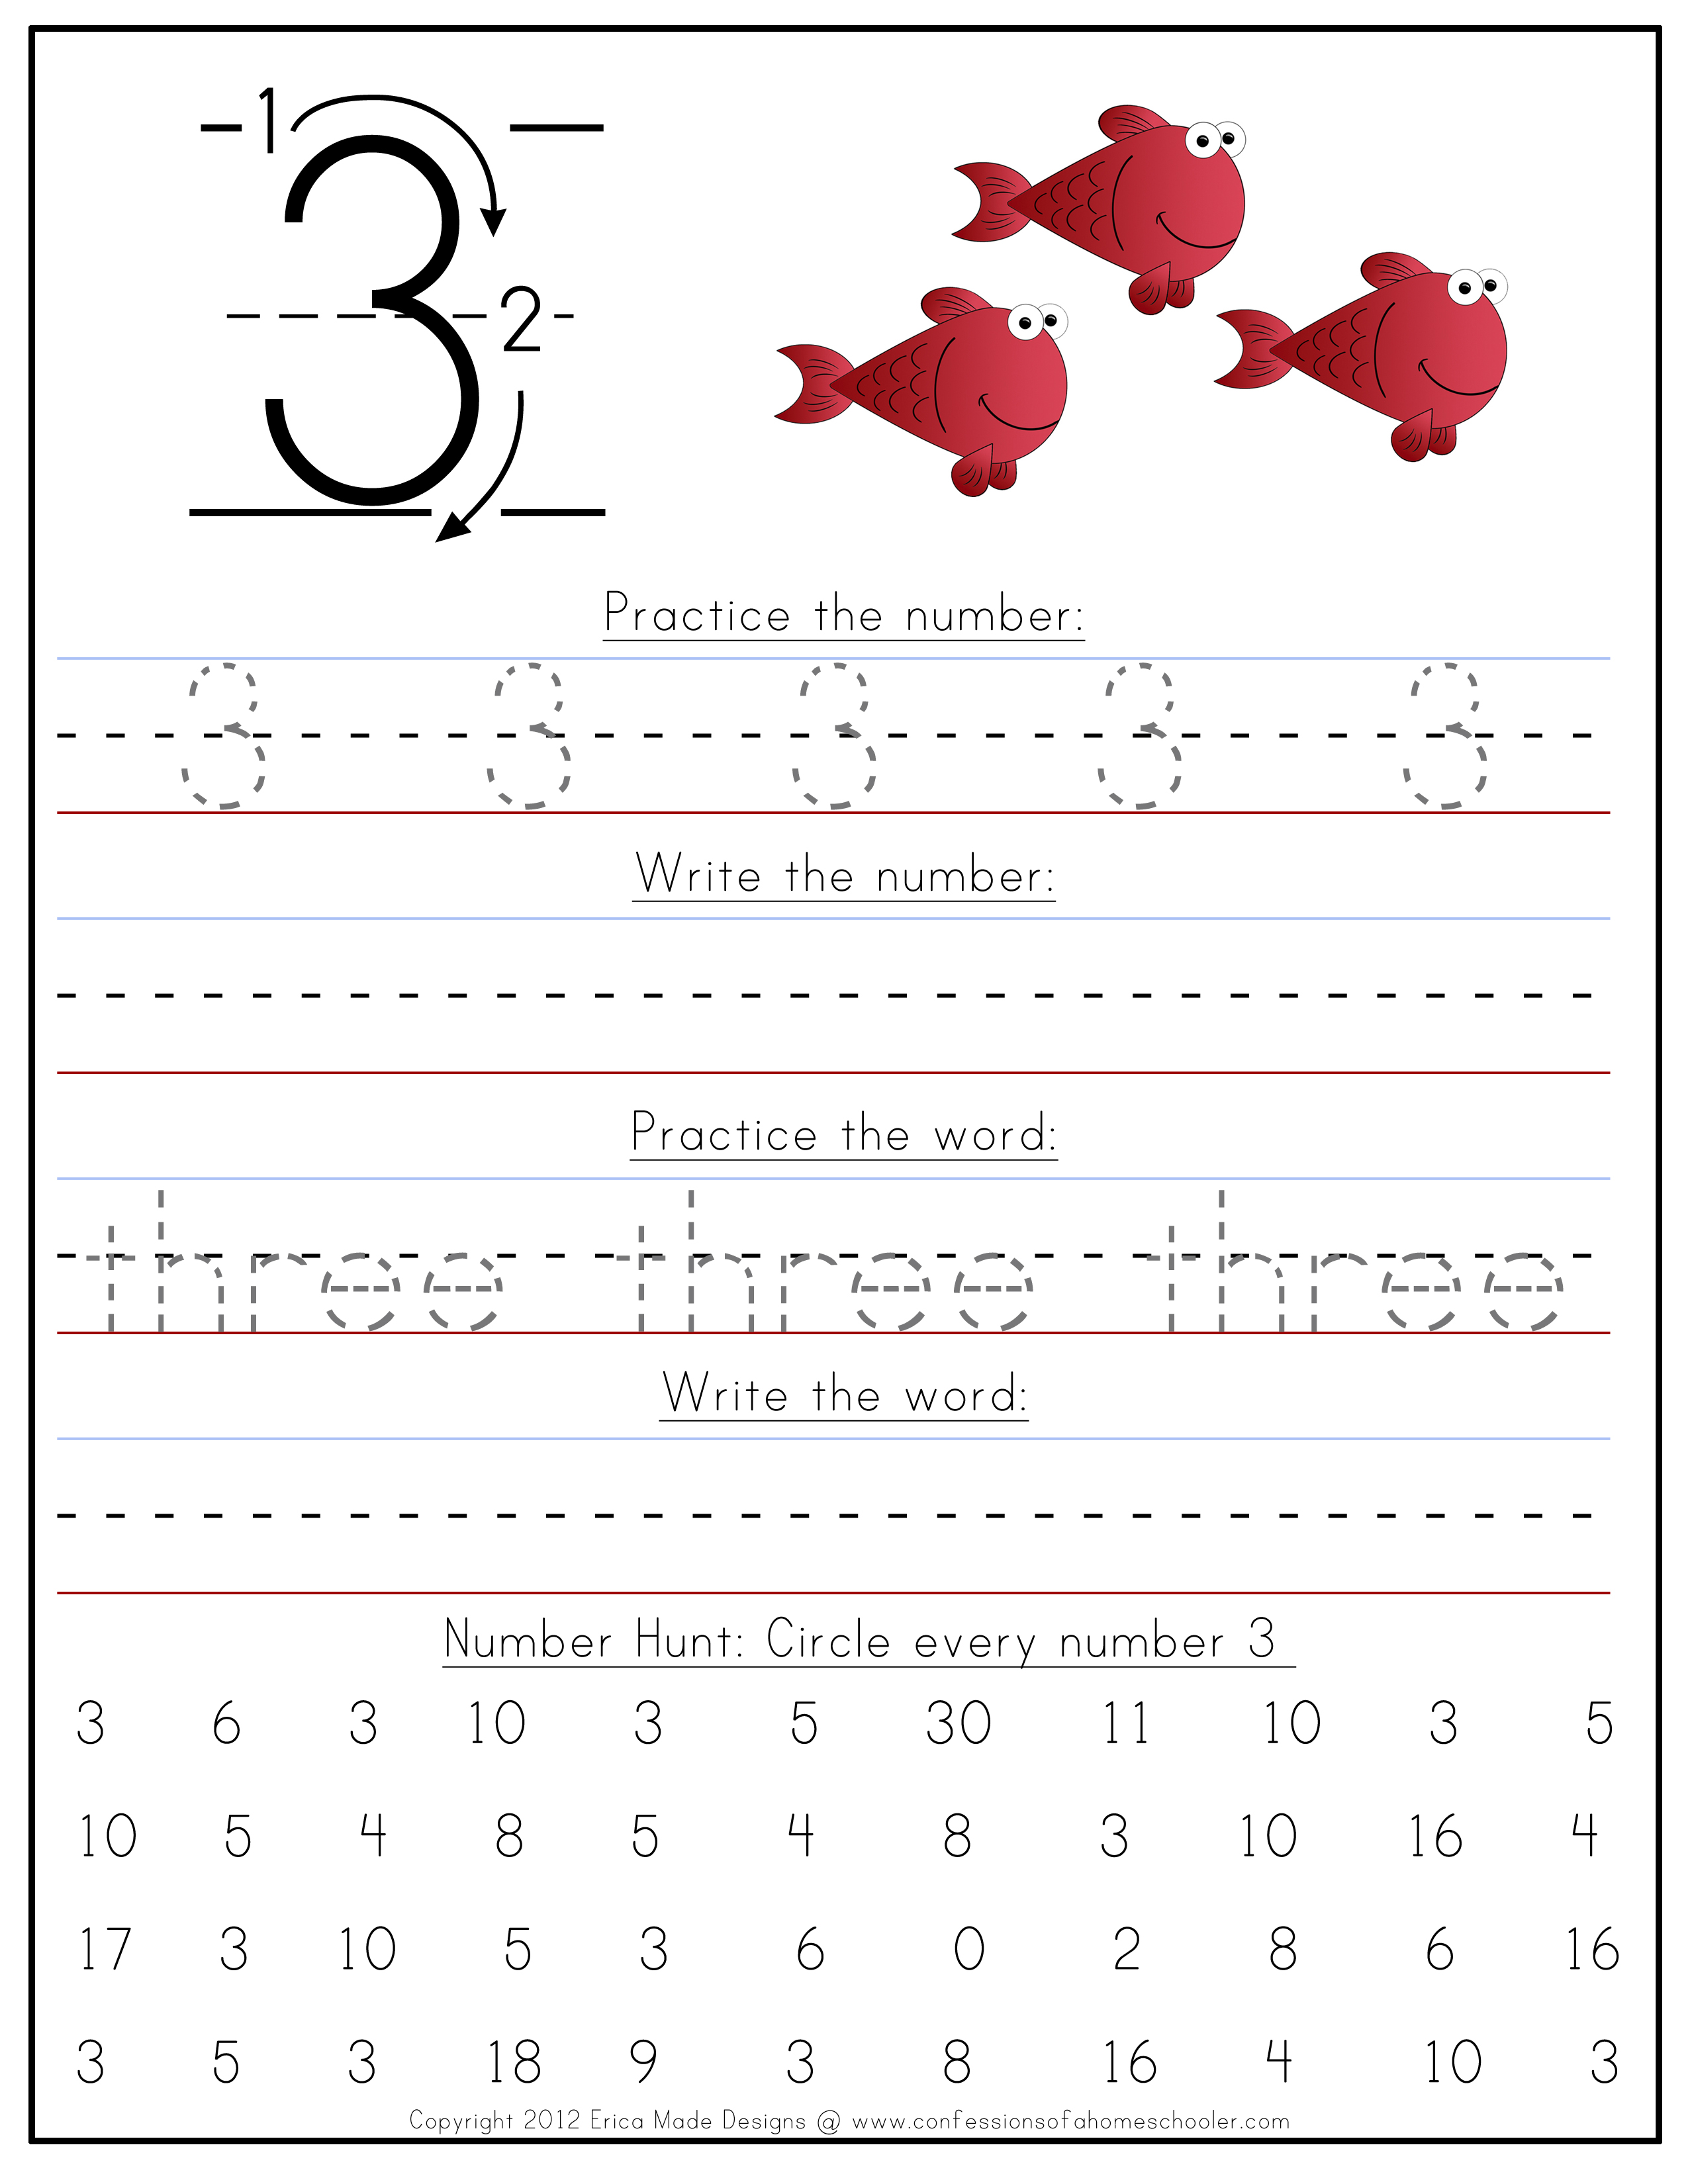 Writing Numbers To Words Worksheet